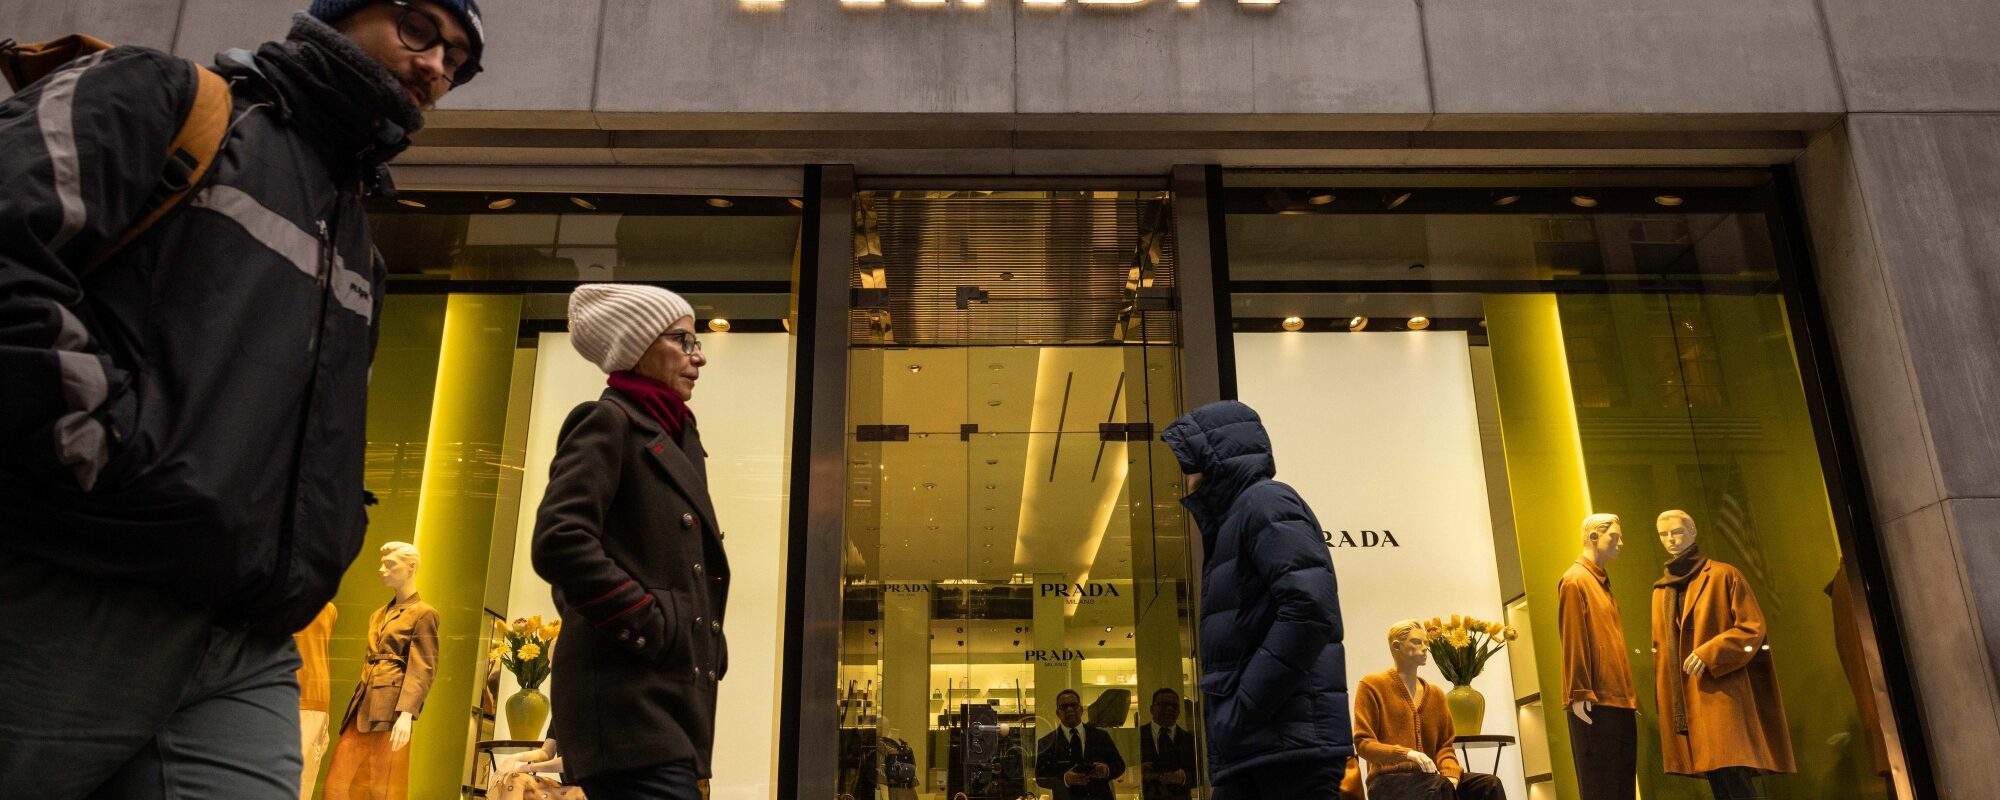 Prada announces billion-euro investment to reinvent the luxury retail experience